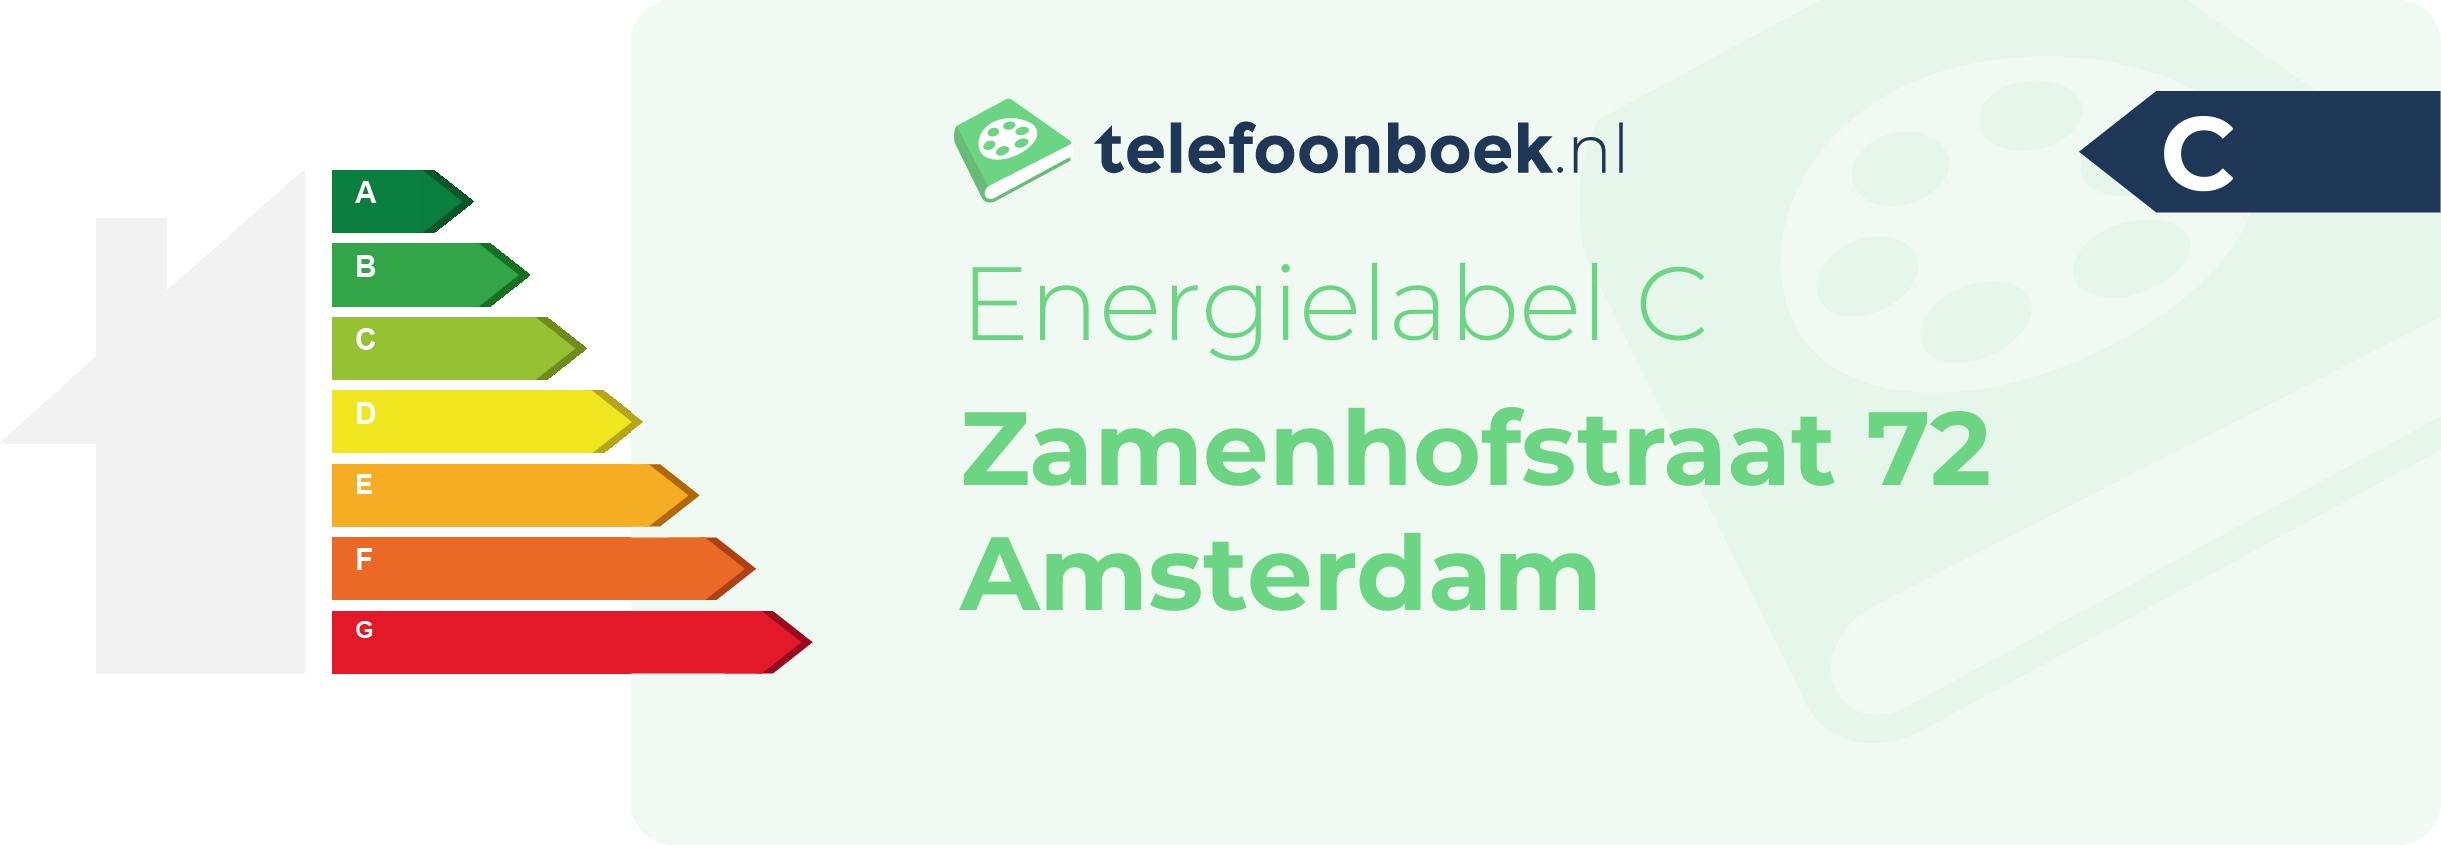 Energielabel Zamenhofstraat 72 Amsterdam